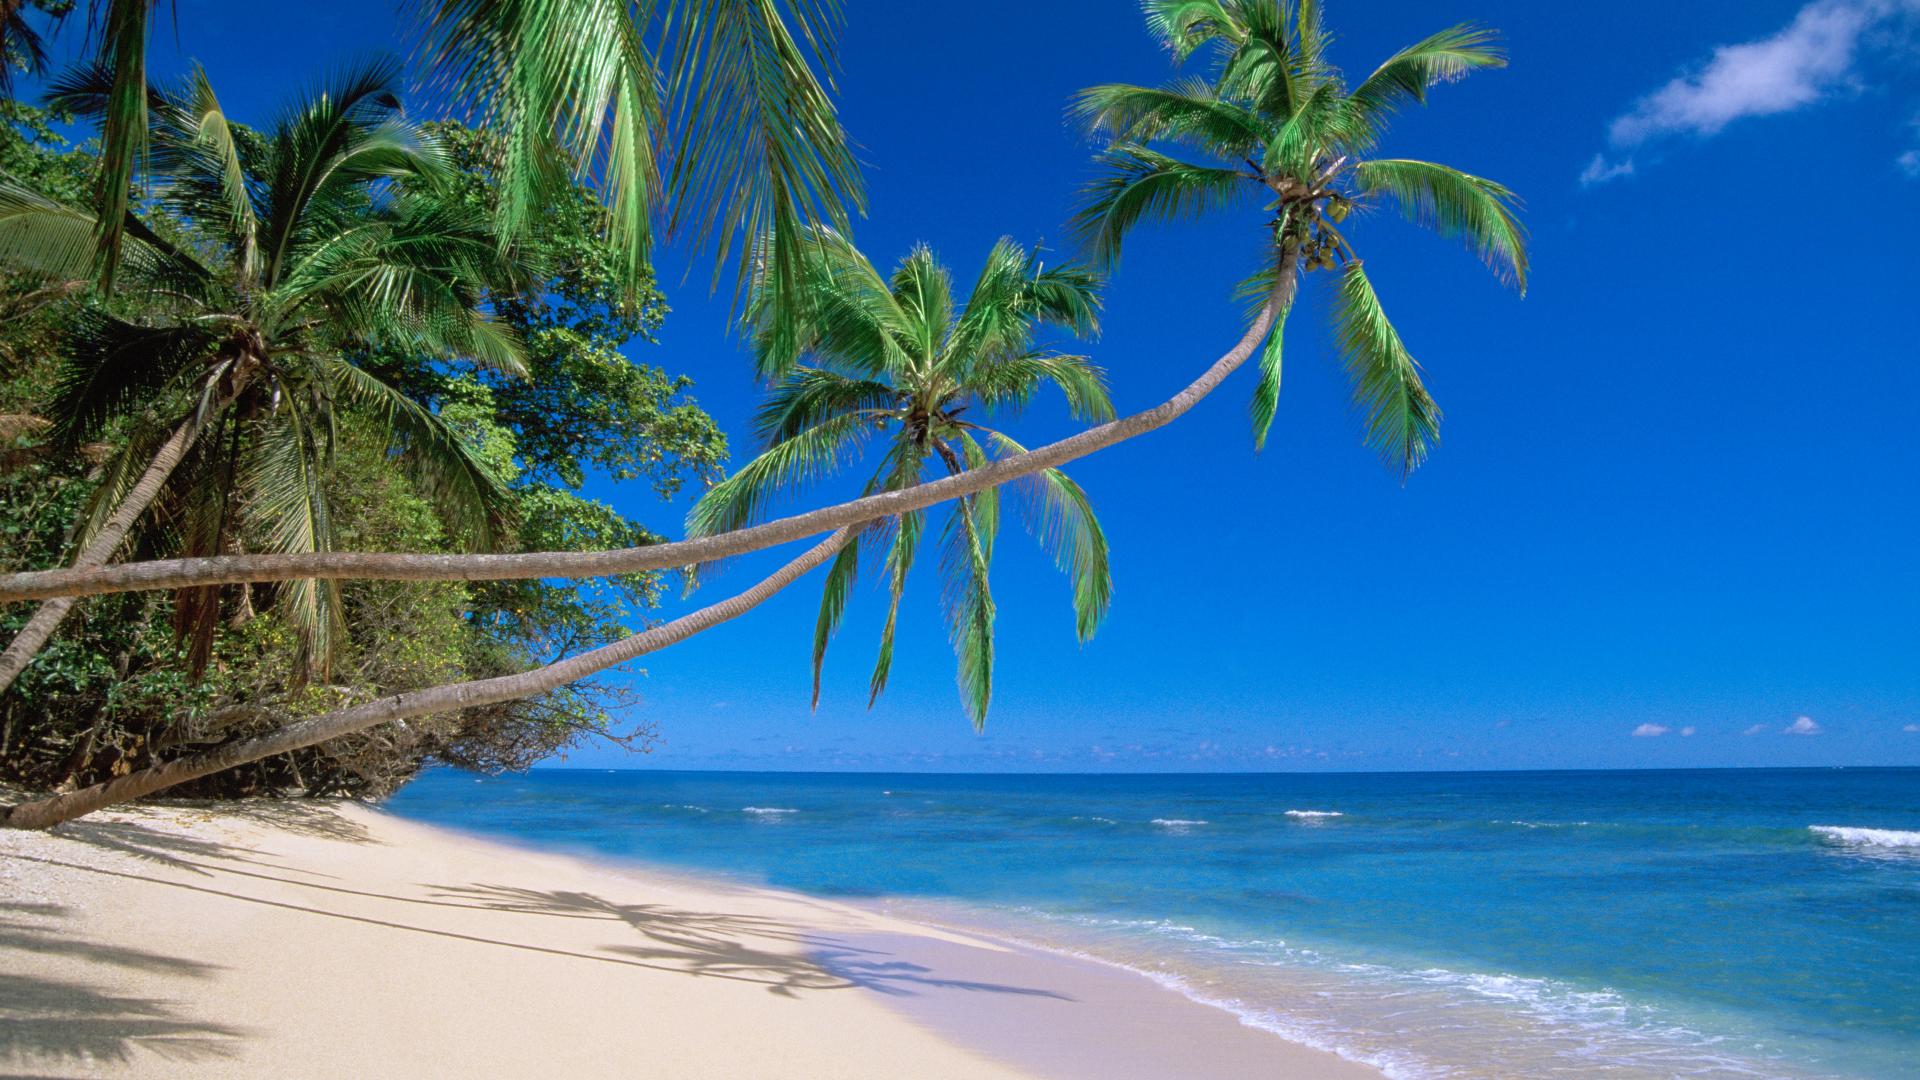 Desktop Backgrounds and Wallpaper   Kadavu Island Fiji   Always Free